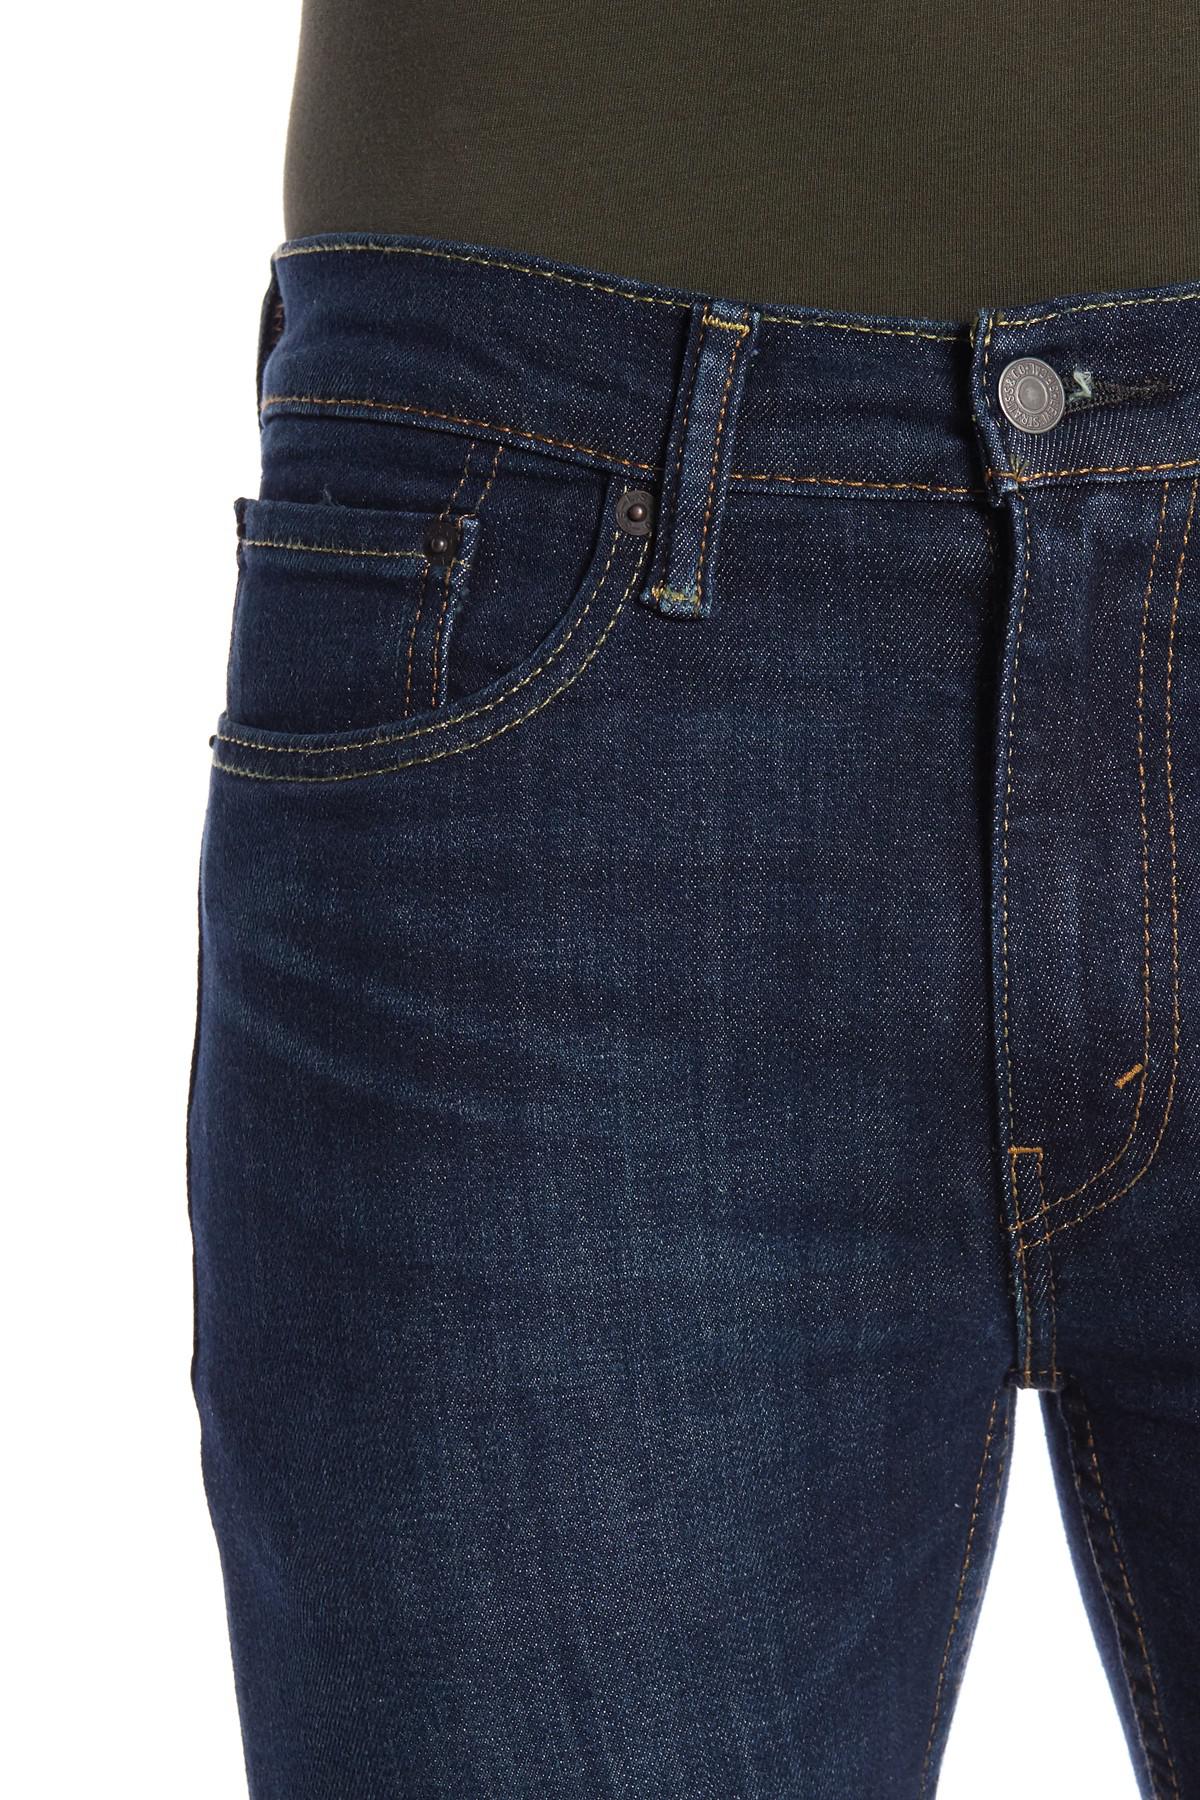 Levi's Denim 519 Extreme Skinny Fit Jeans - 30-34